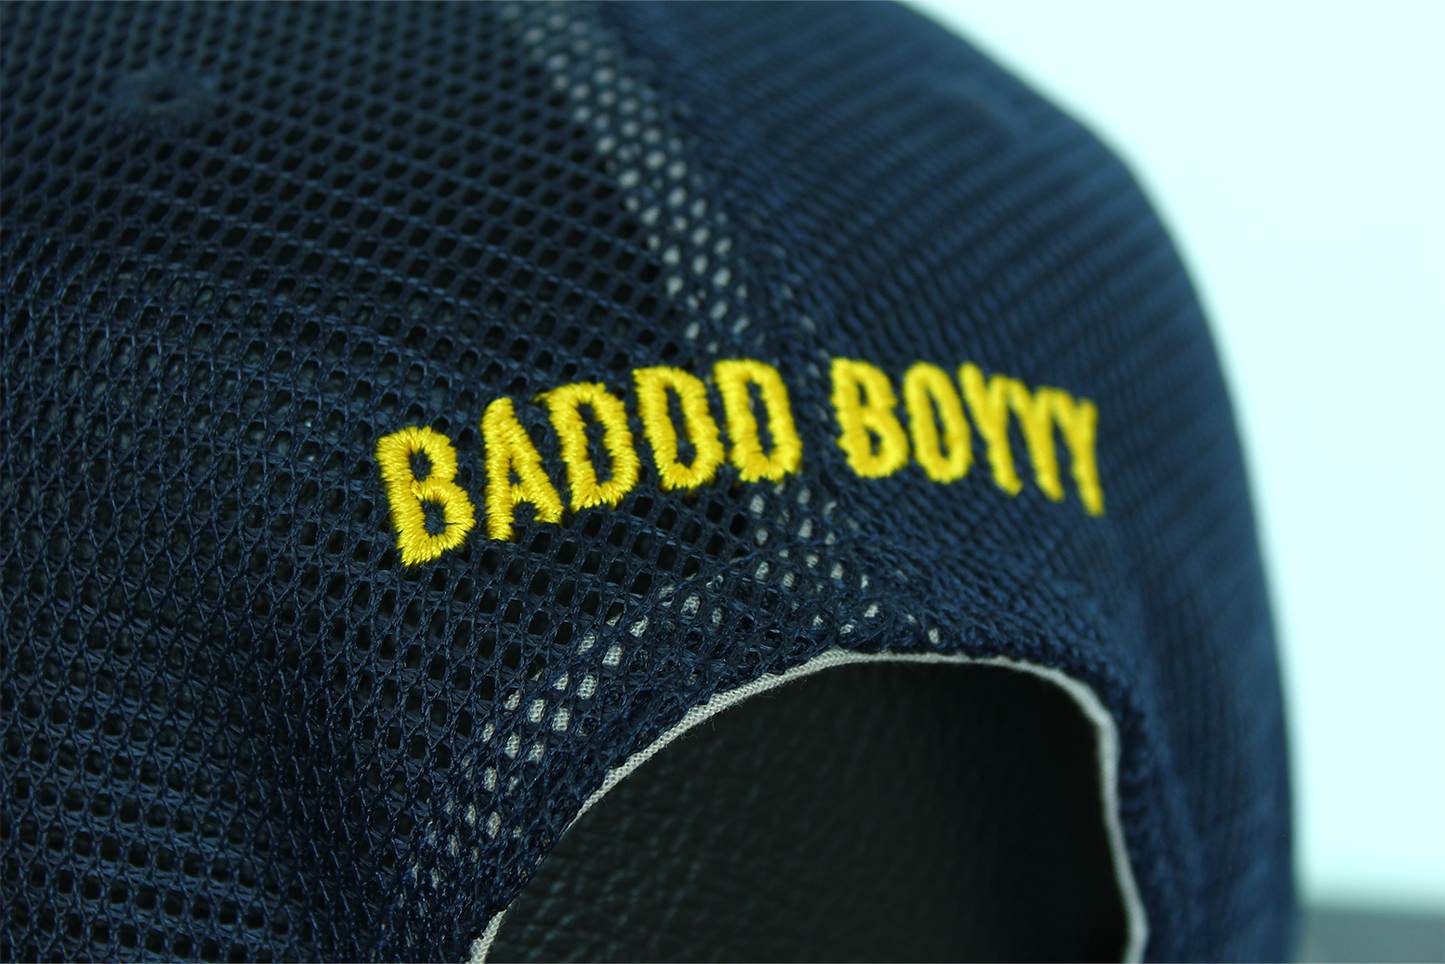 Bad Boy S/B (Navy Blue)